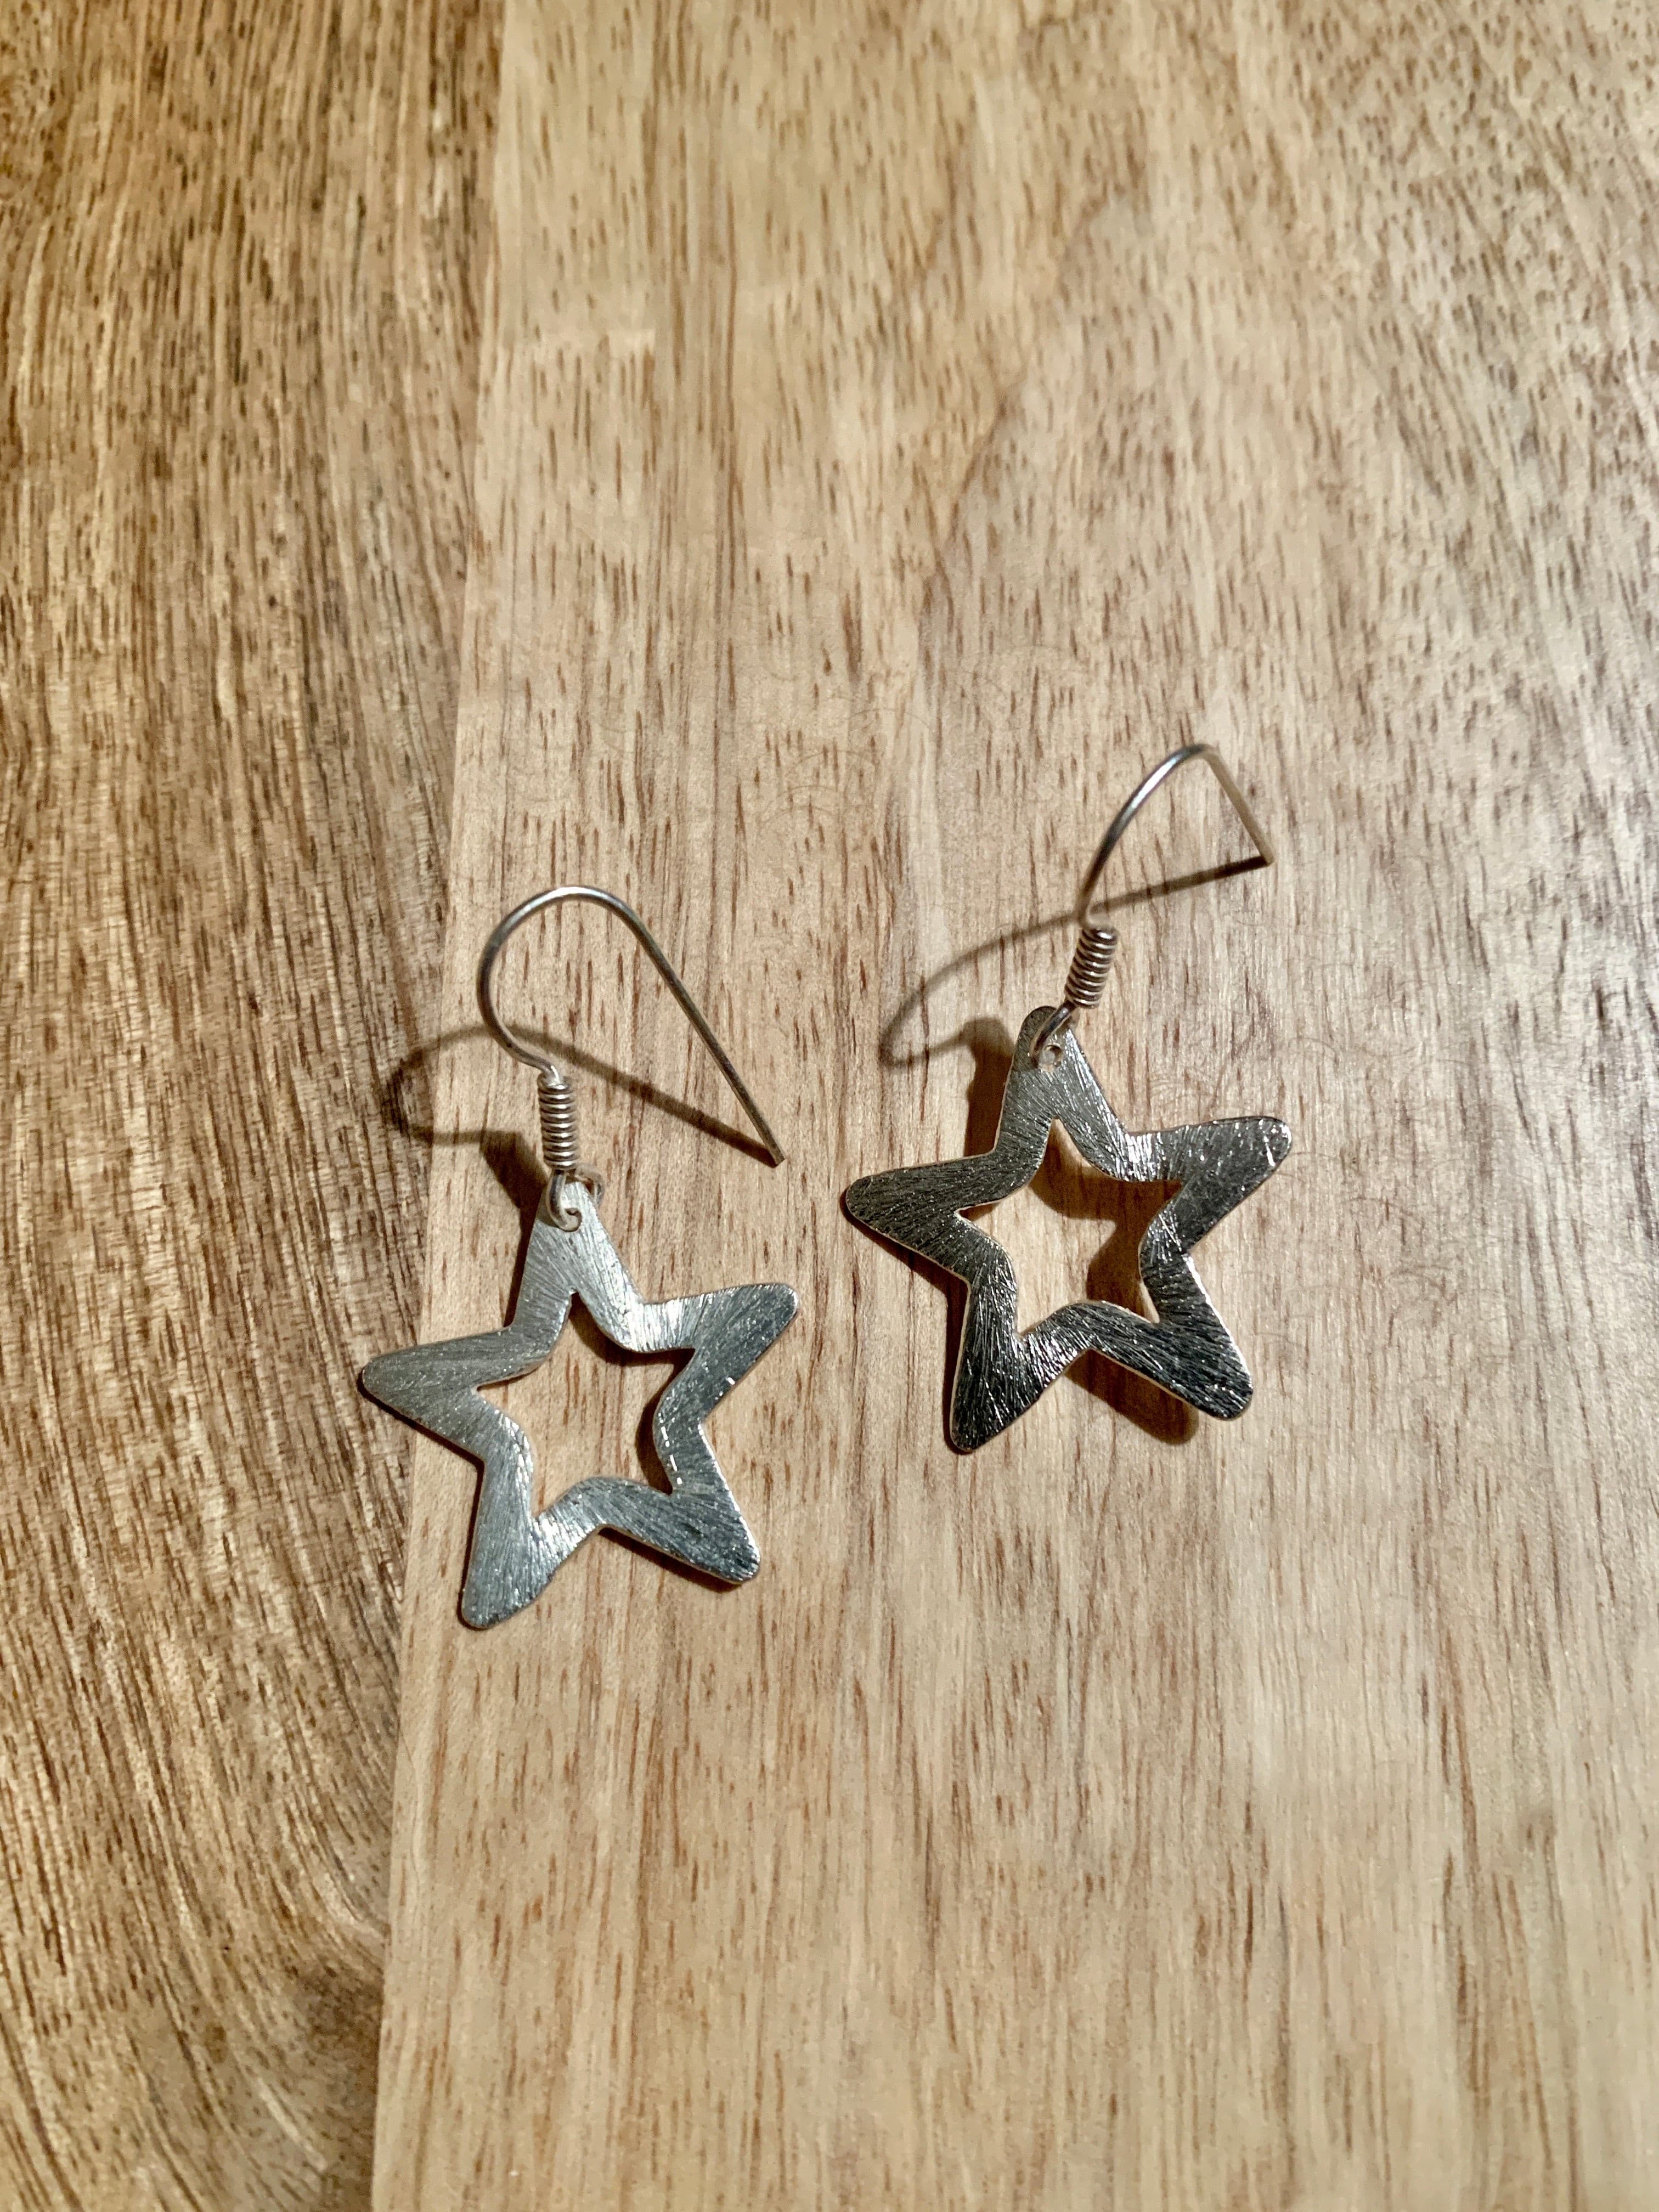 Brushed Silver Star Earrings.